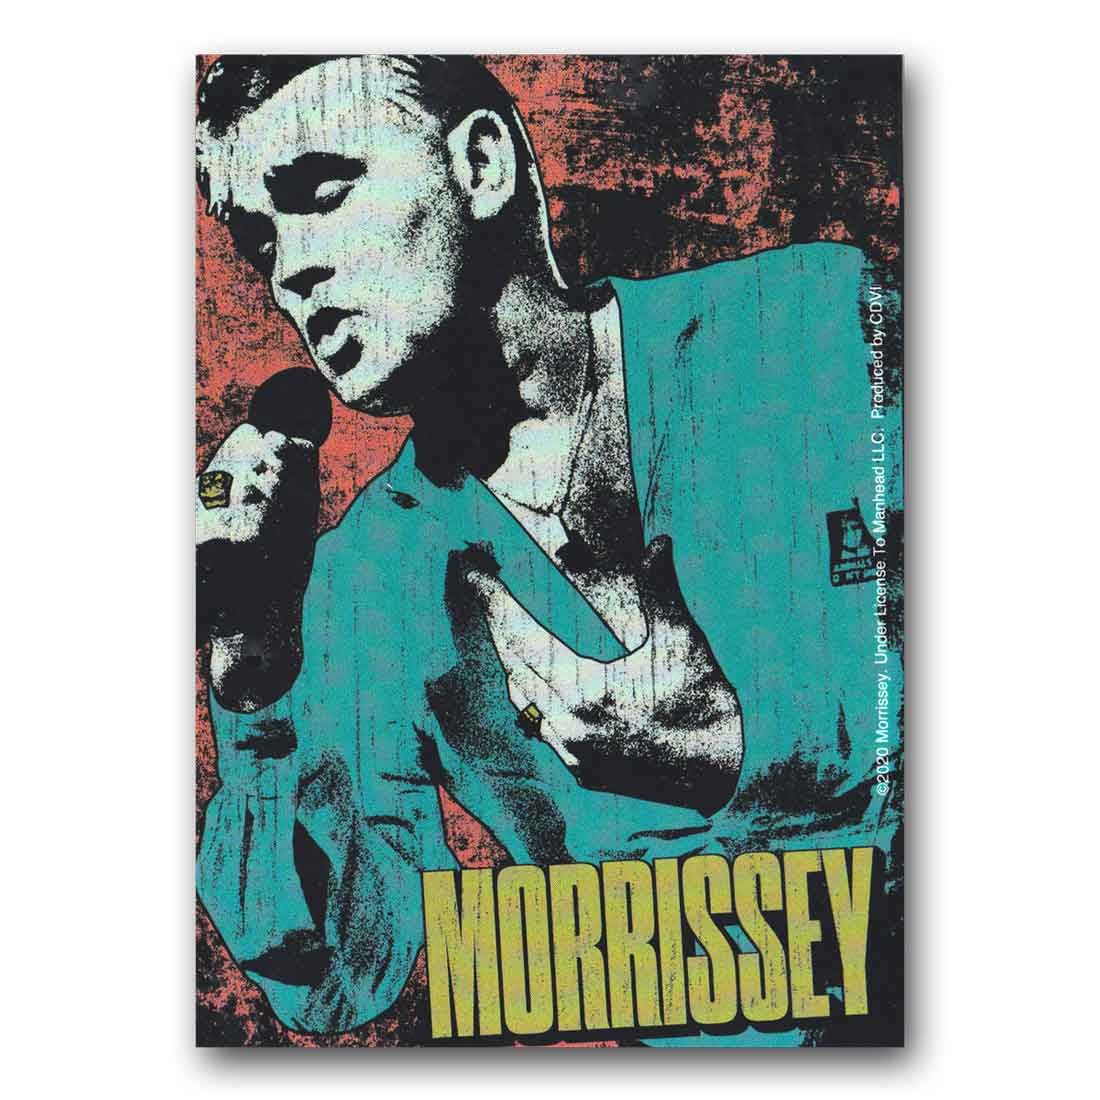 Morrissey Bona Drag Teal Vinyl Limited | itsevolve.com